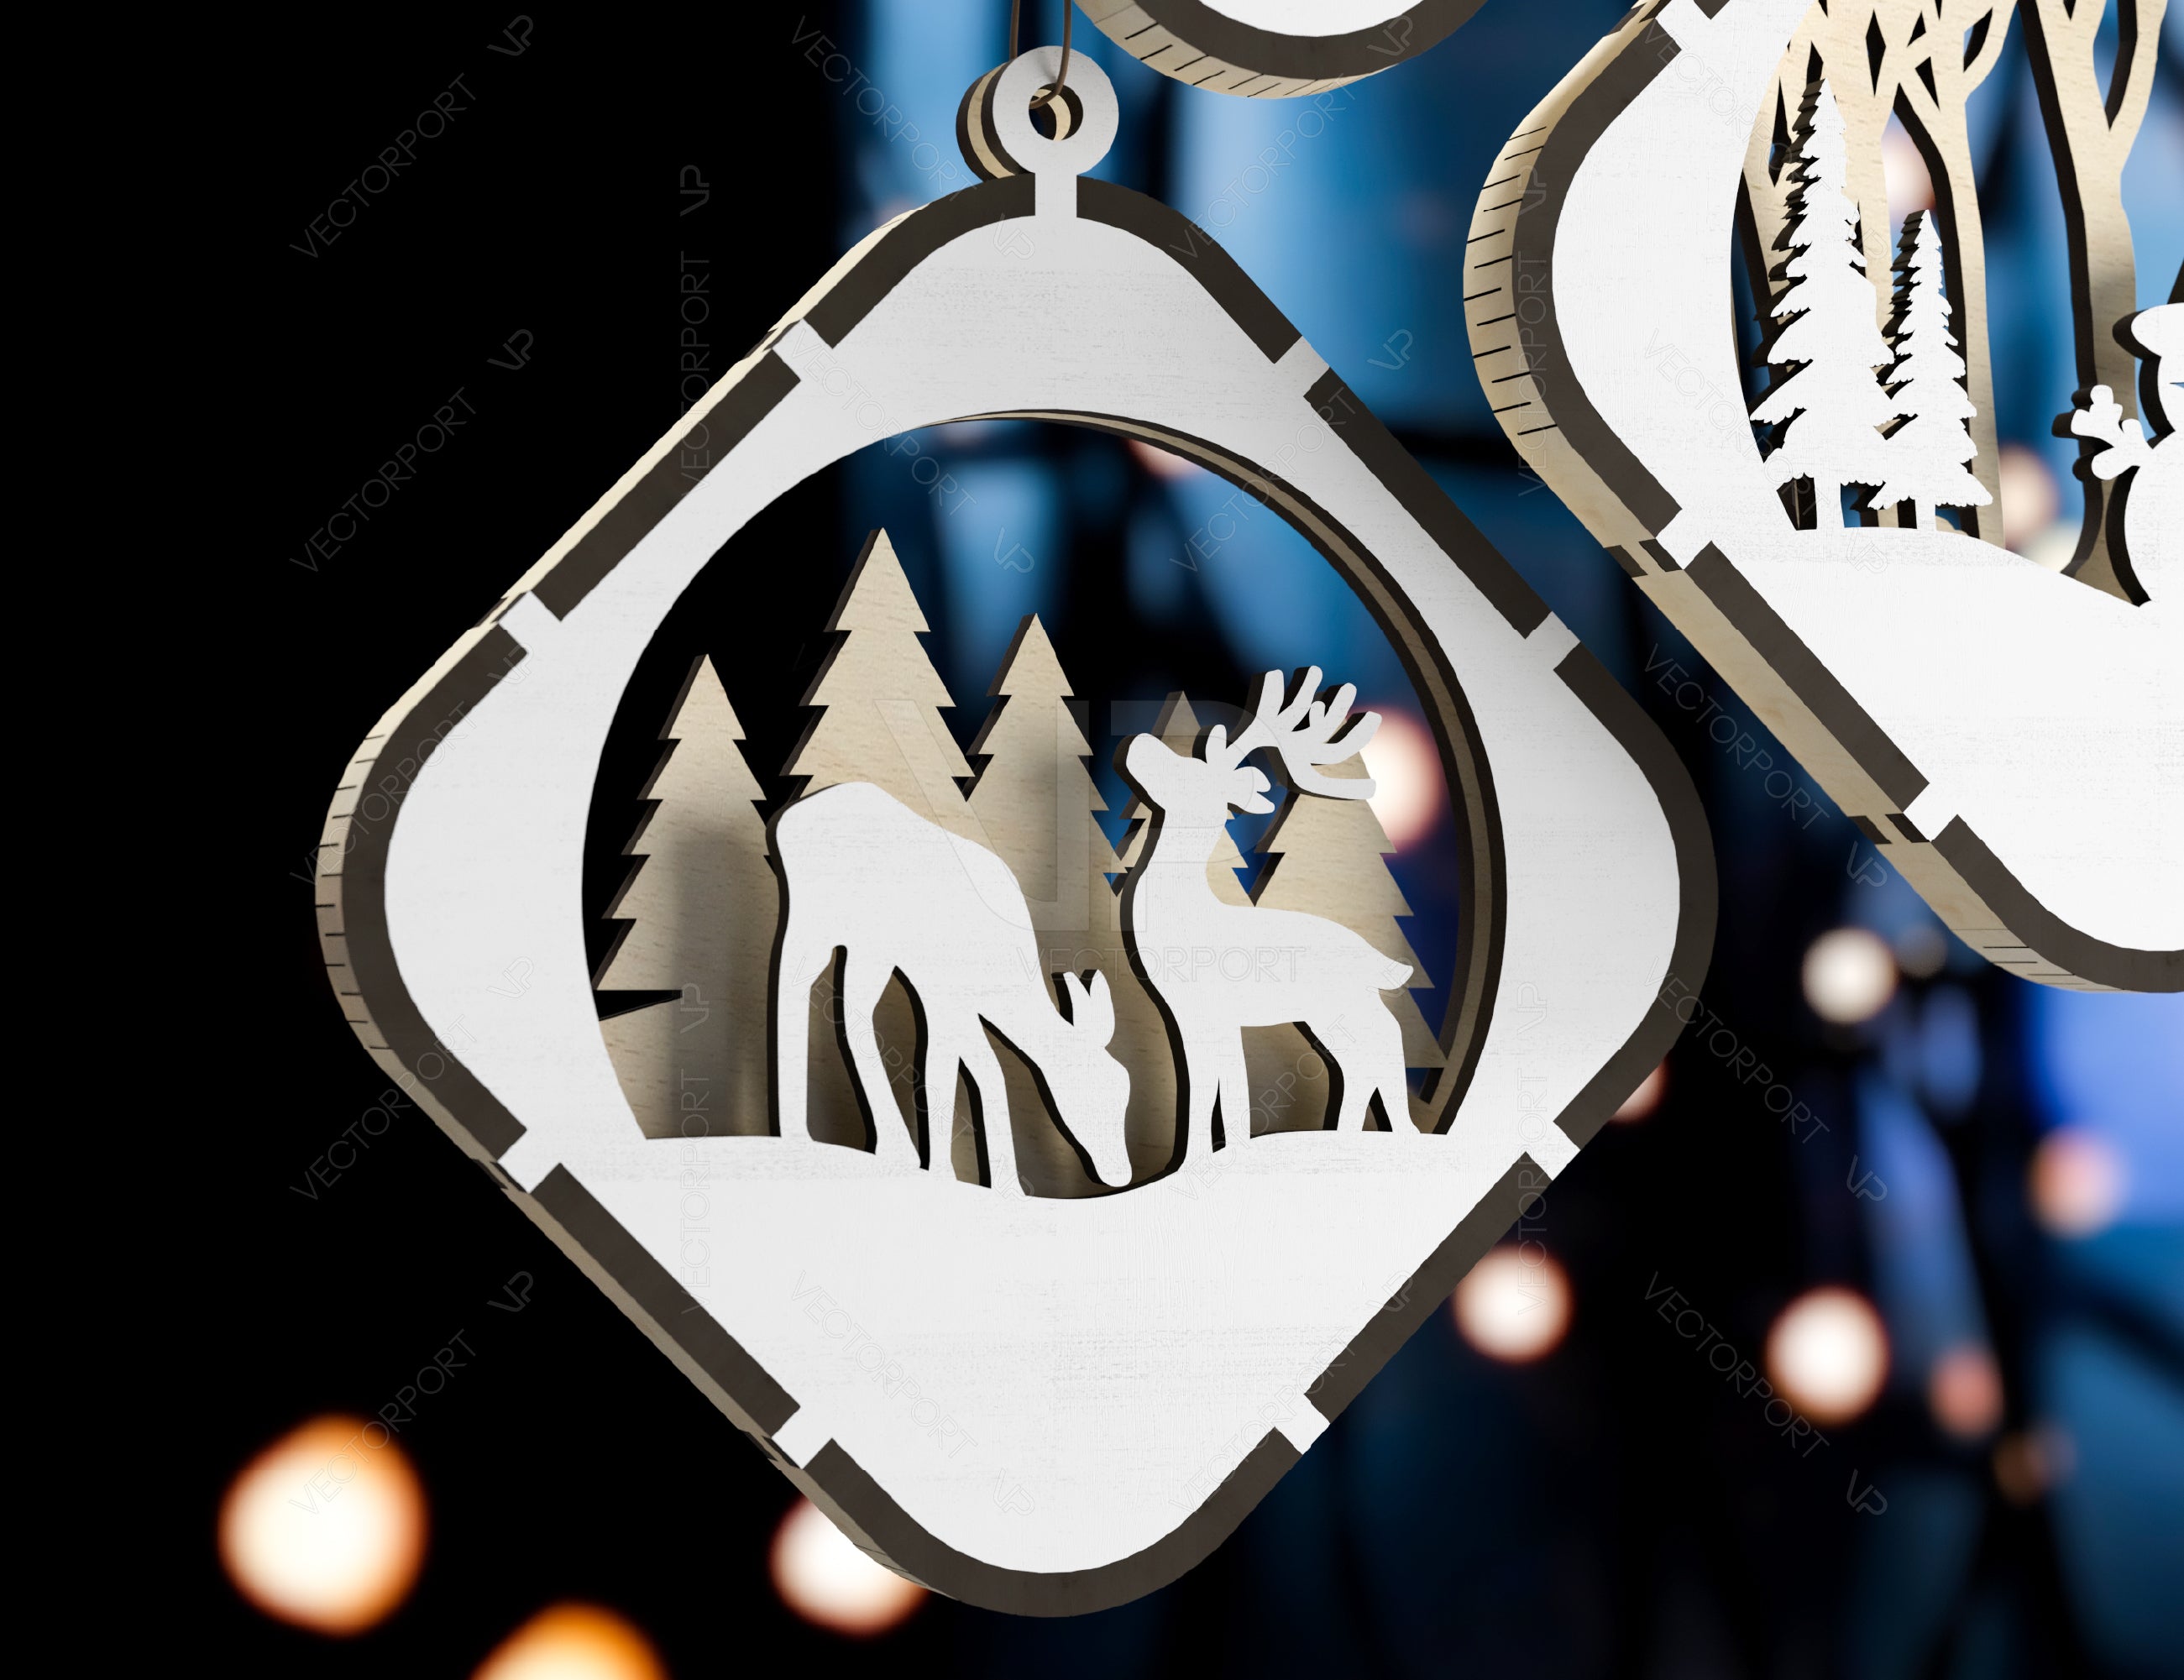 Christmas Balls Tree Decorations Craft Hanging Bauble Snowy Scene Deer New Year Décor Laser cut Digital Download |#U299|